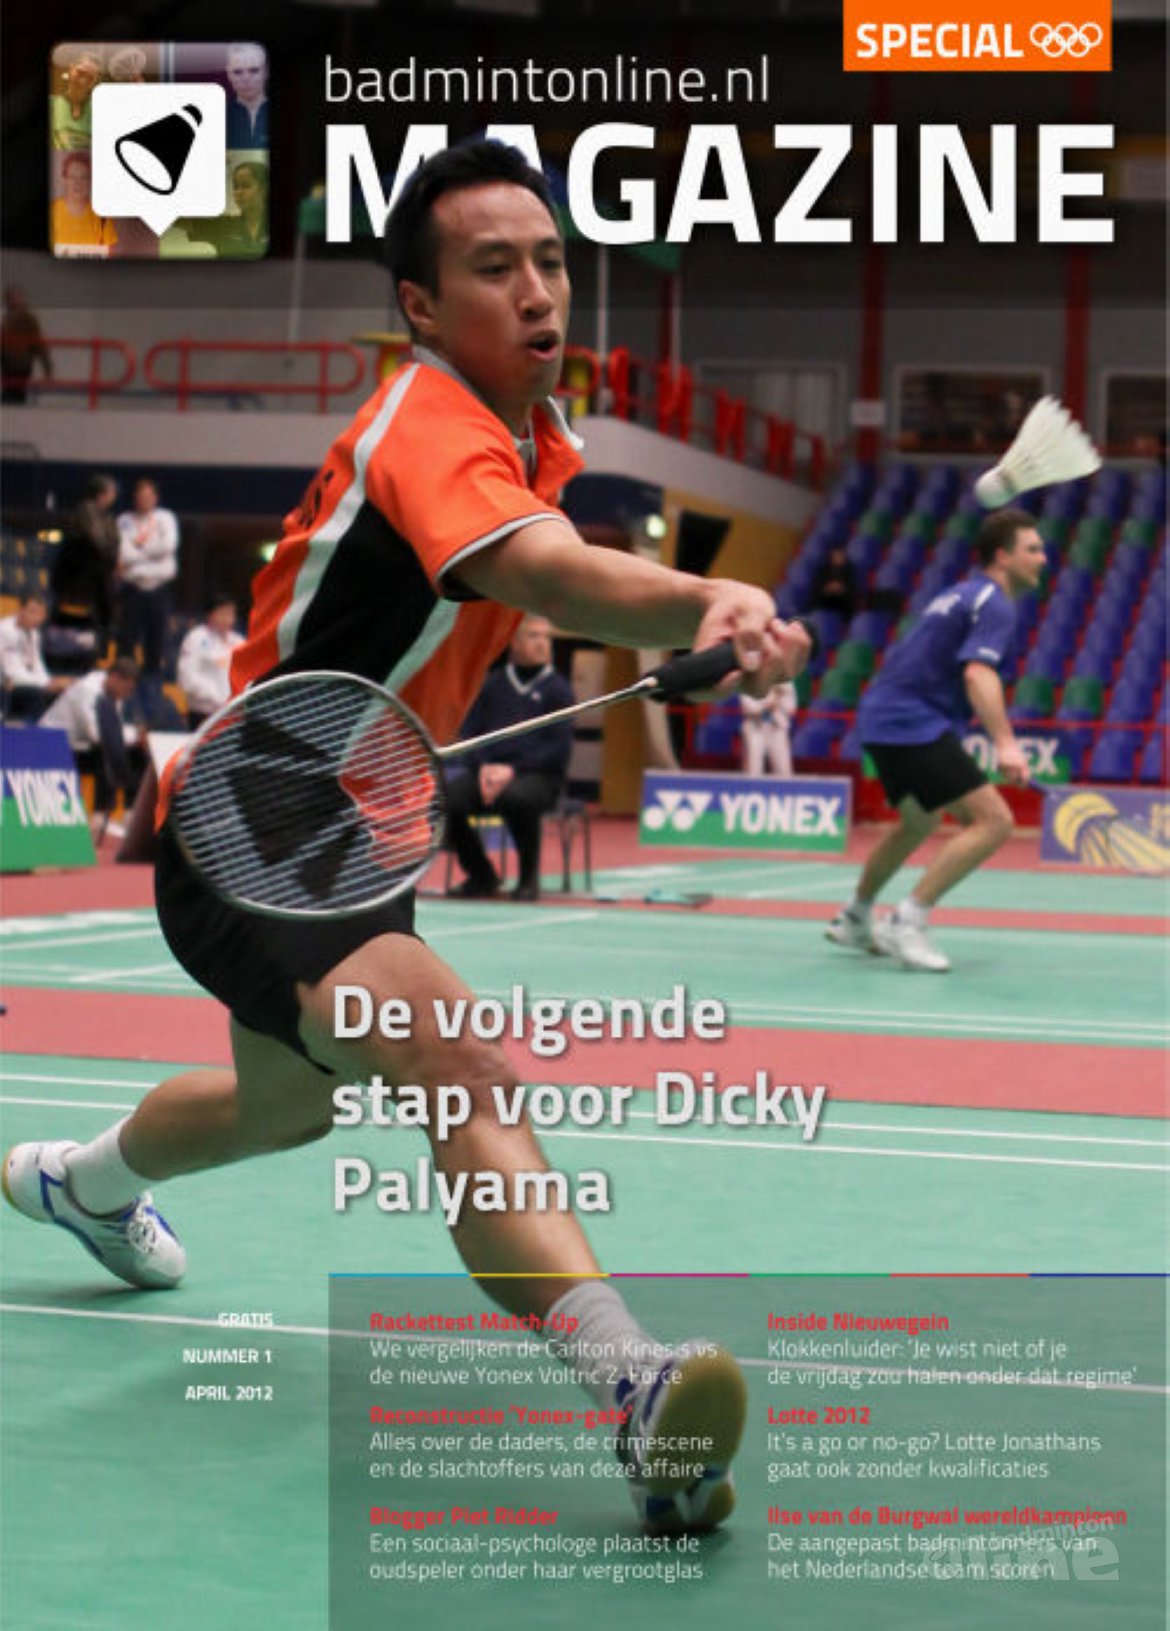 cover badmintonline.nl MAGAZINE